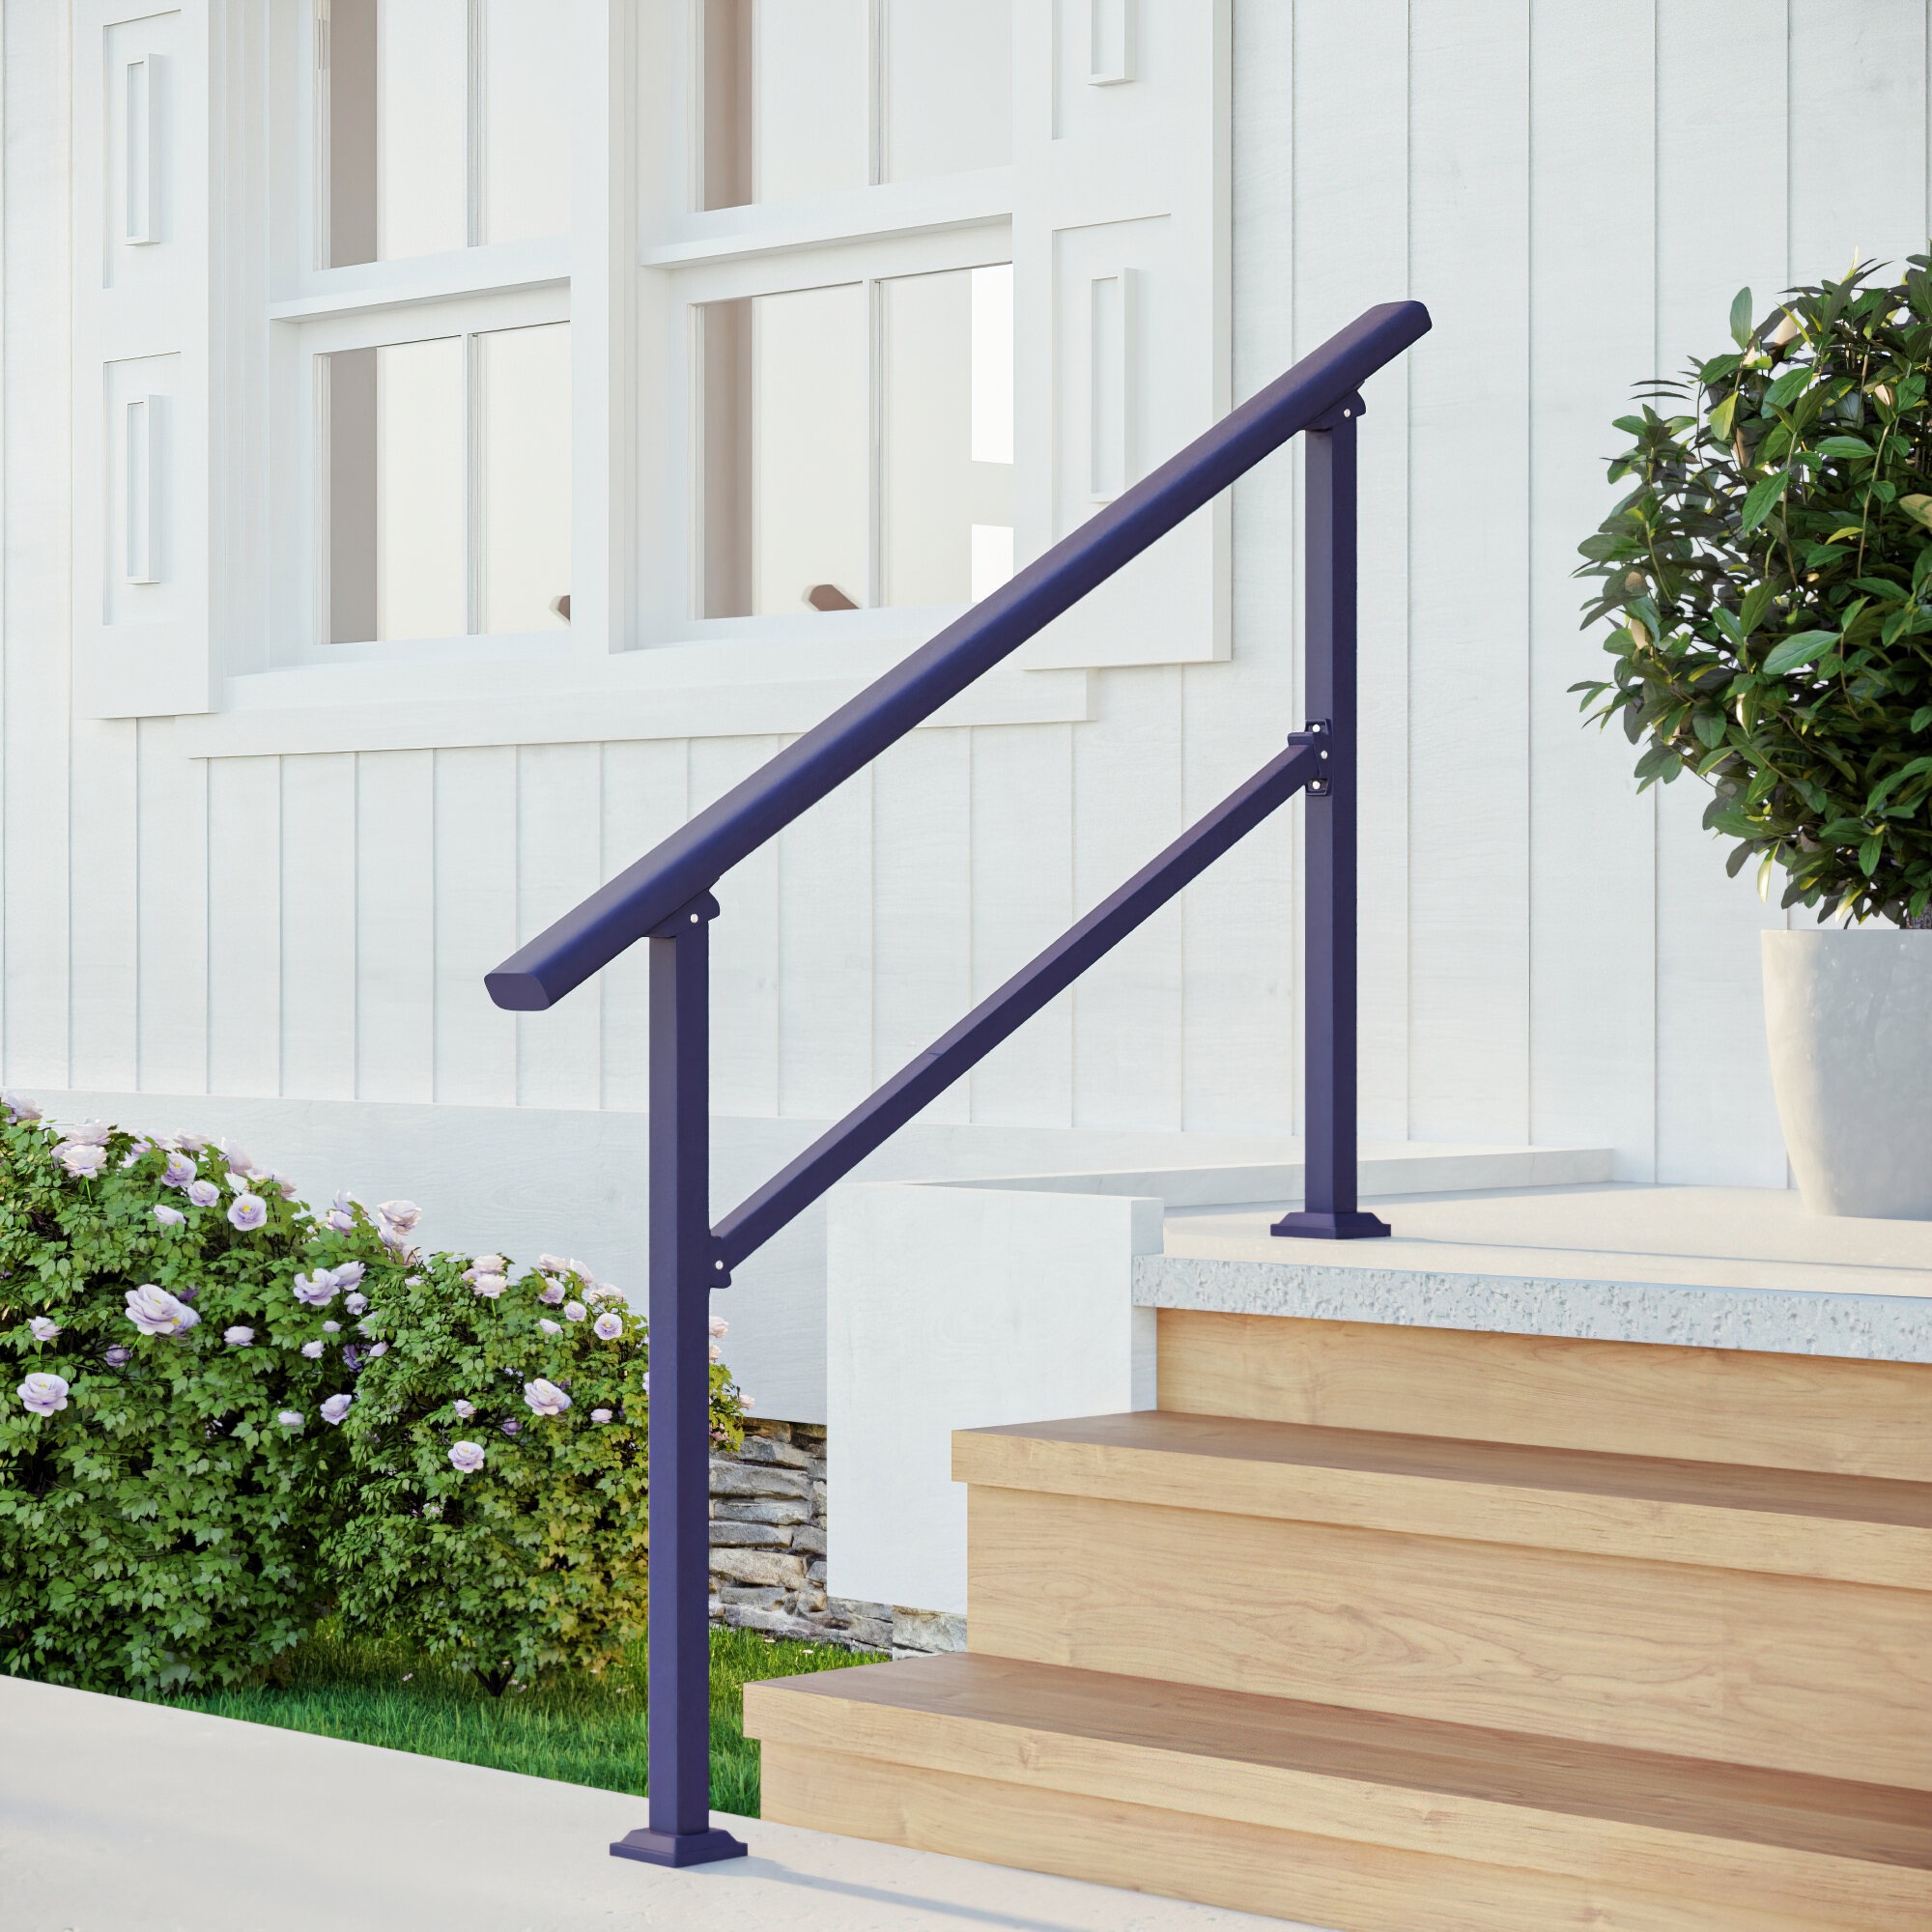 Outdoor Metal Stair Railing Kits - VisualHunt